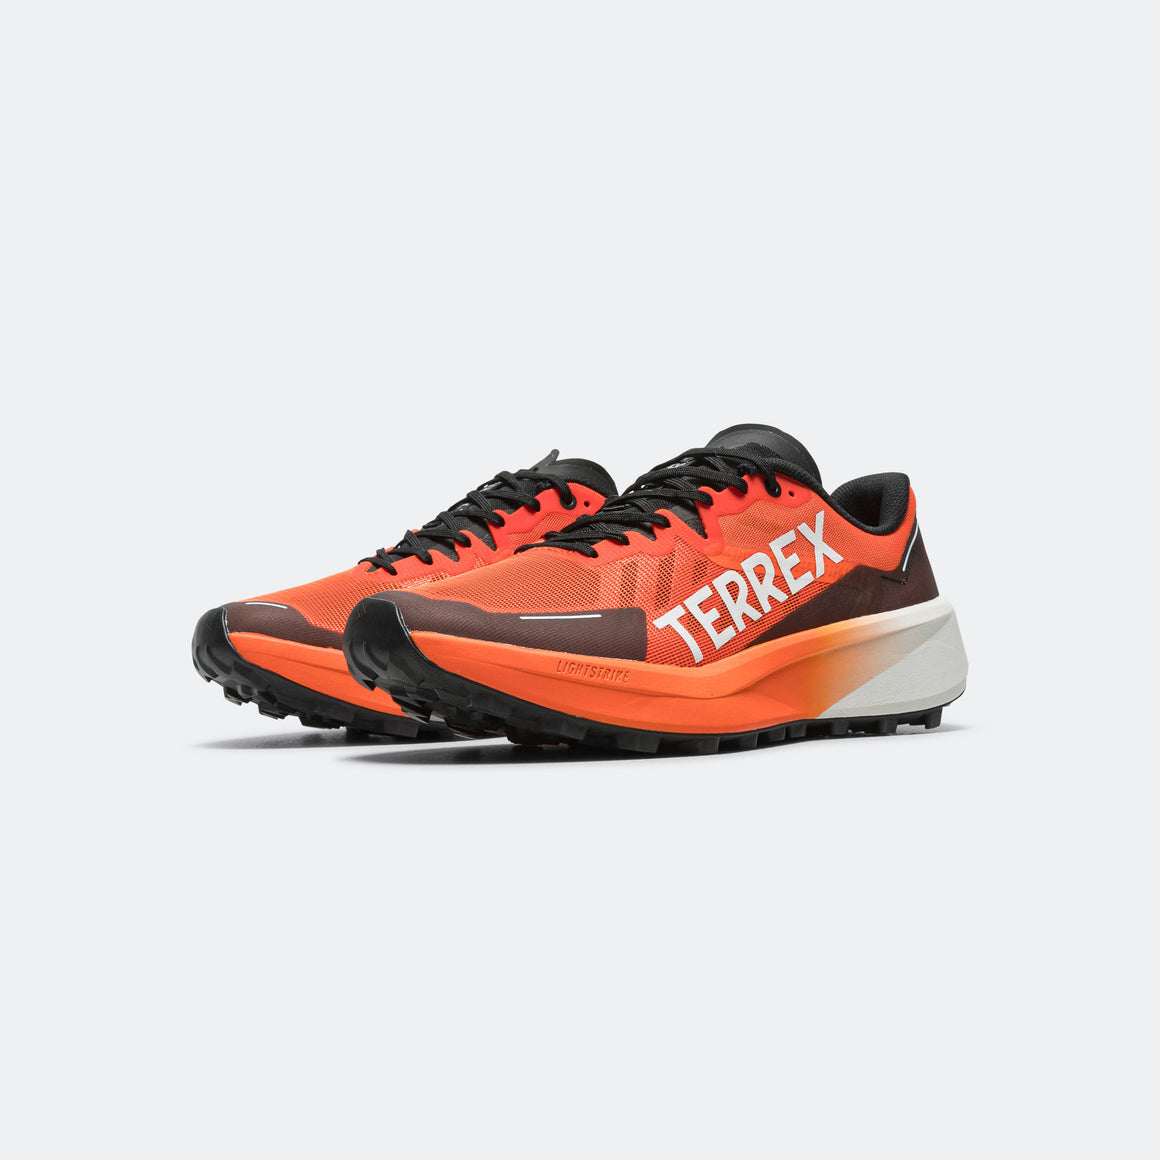 adidas - Terrex Agravic 3 - Semi Impact Orange/Grey One - Up There Athletics